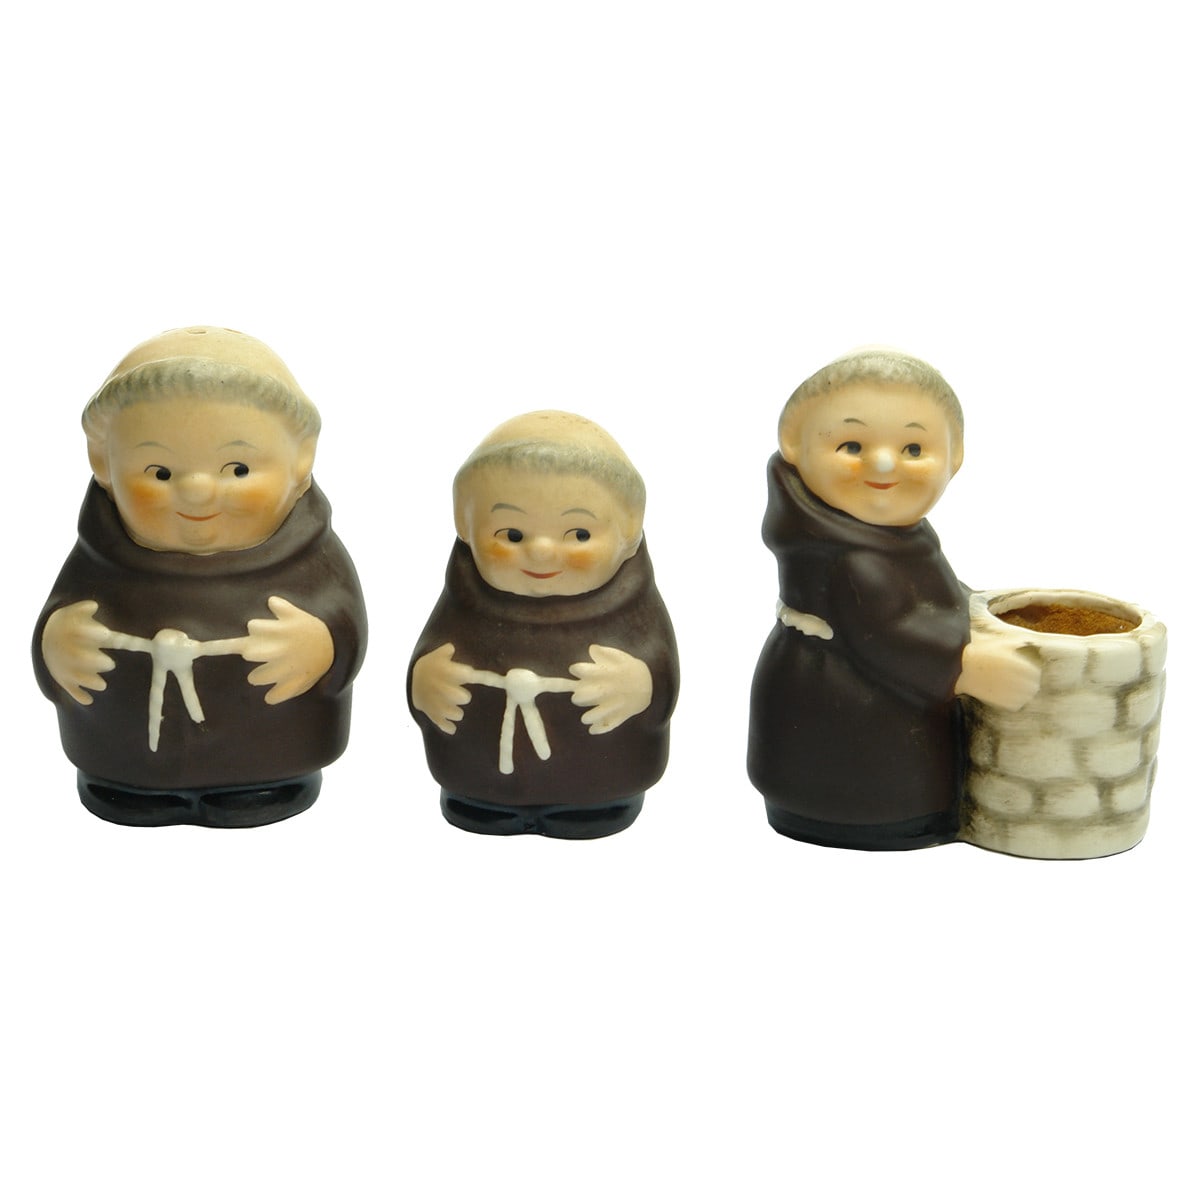 Pottery. Goebel, West Germany Salt and Pepper Shaker and Toothpick Holder modelled on Friar Tuck. (Germany)